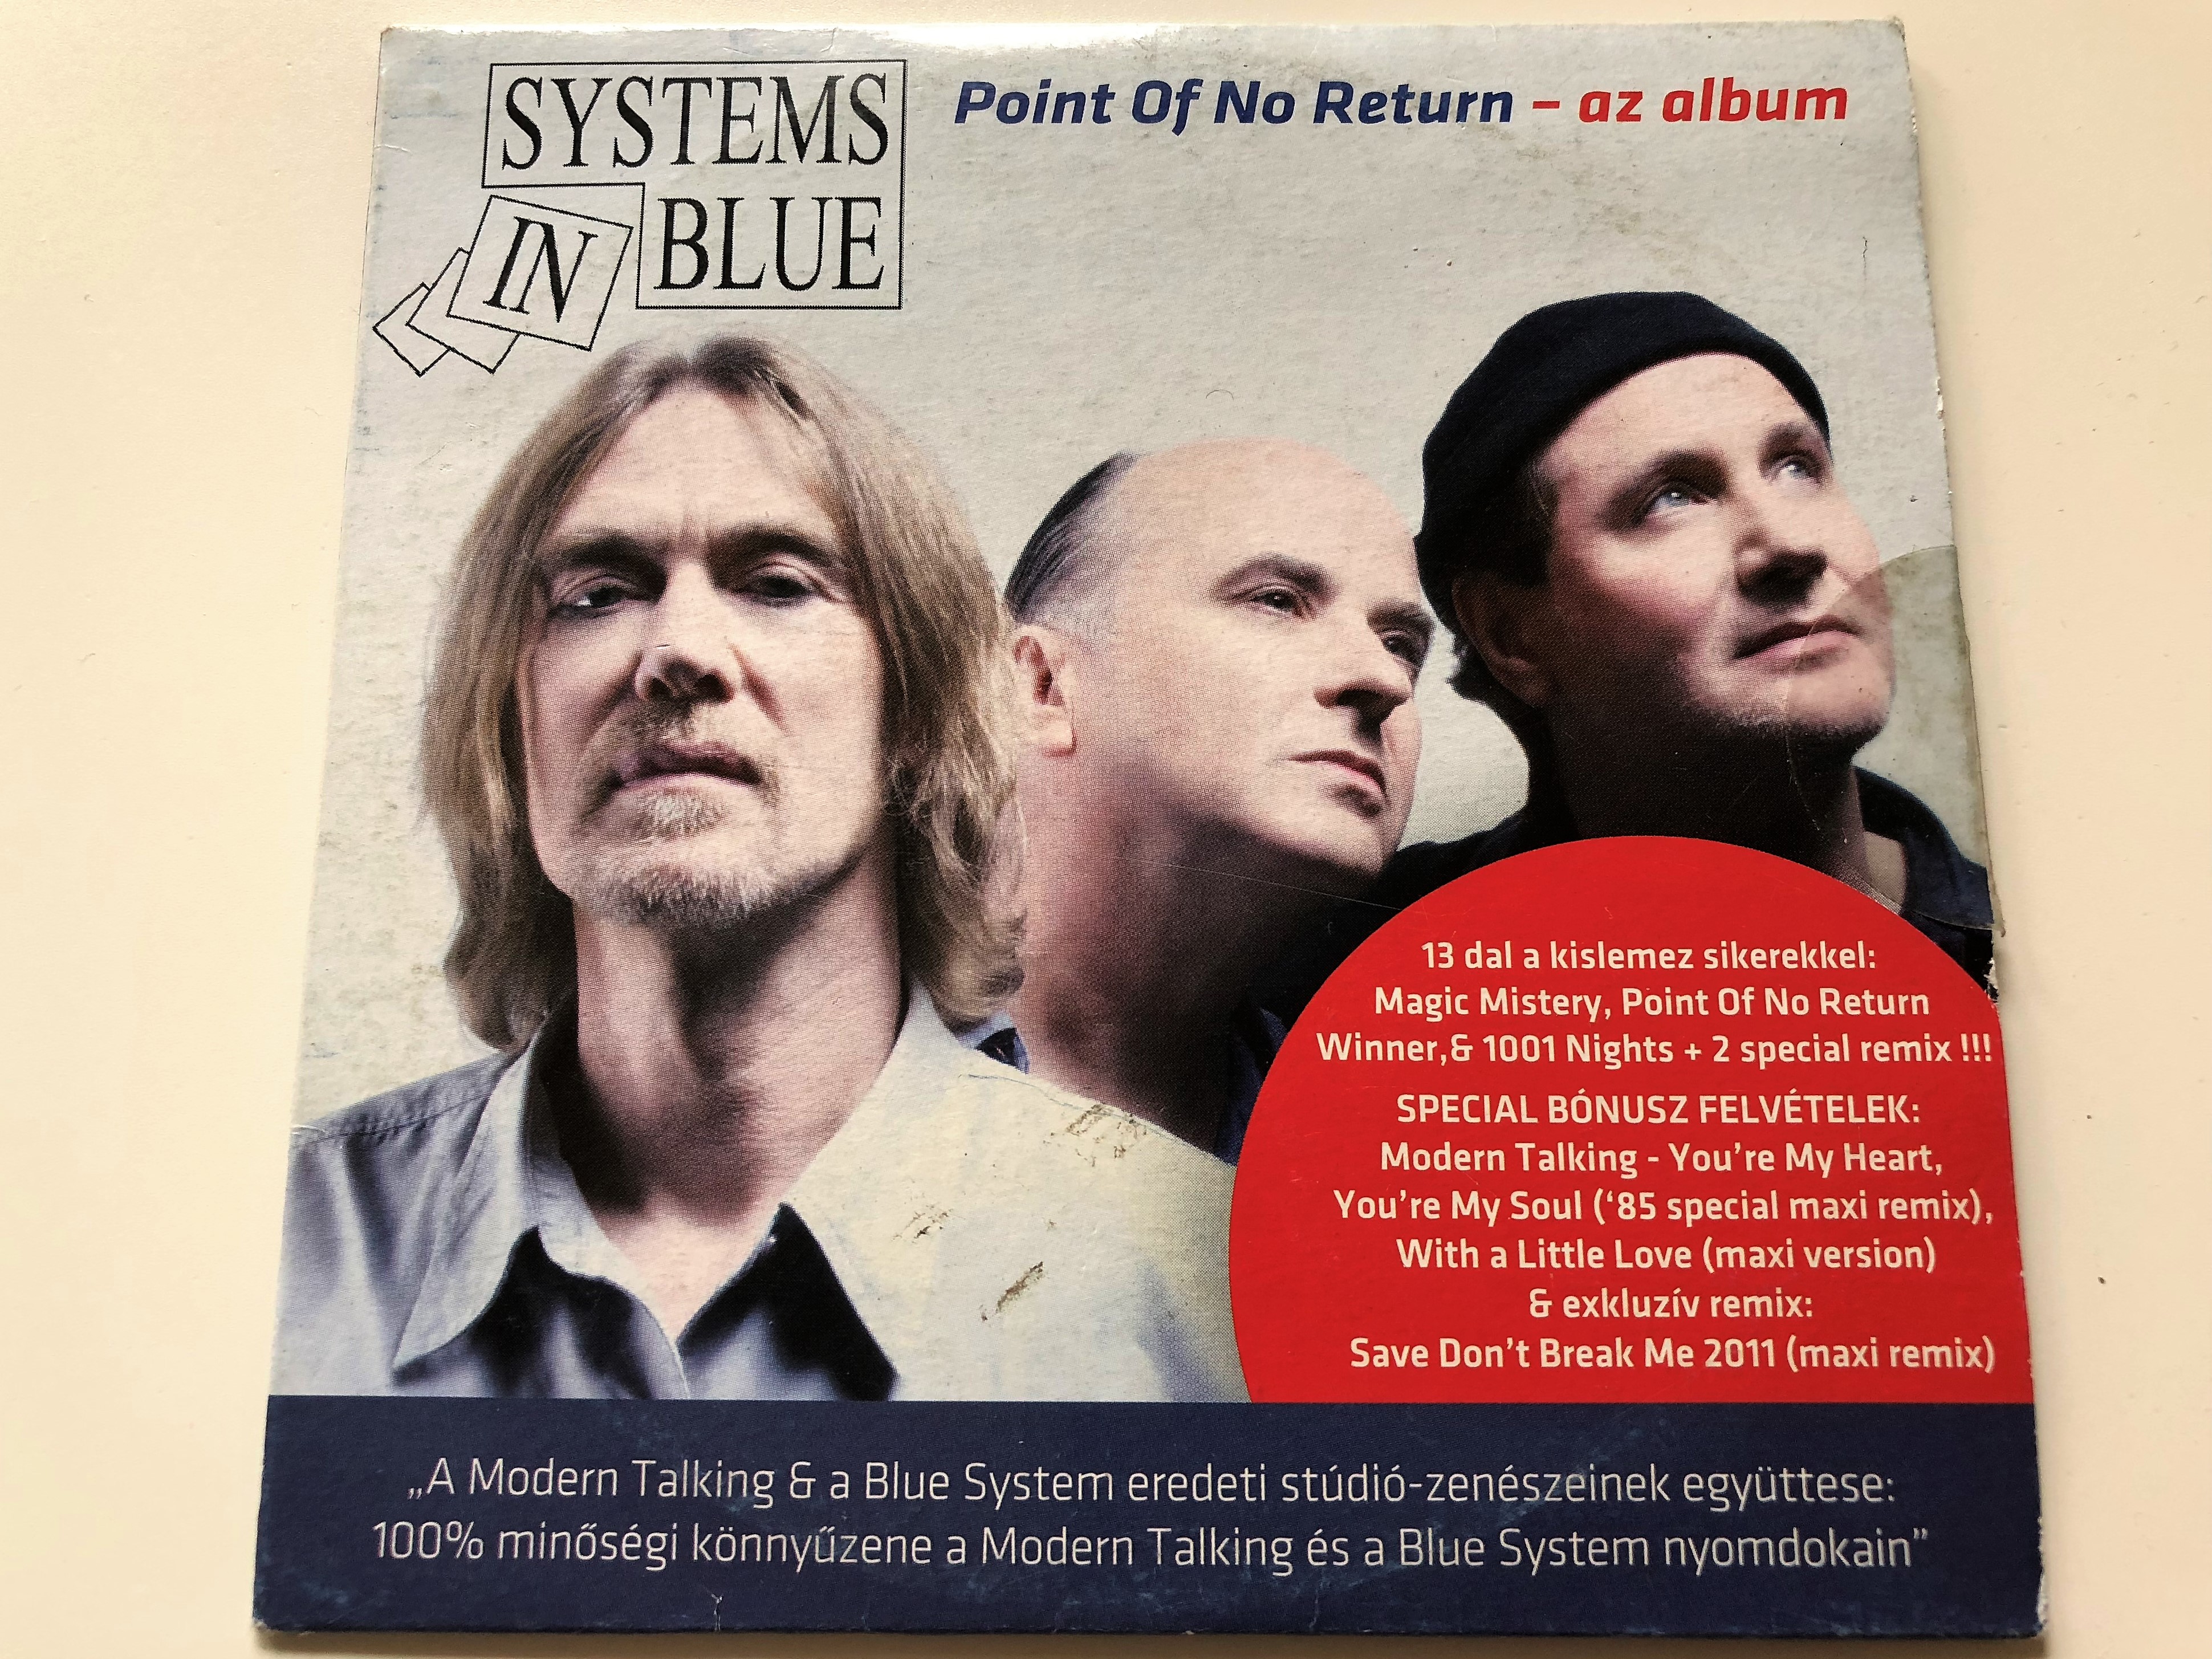 systems-in-blue-point-of-no-return-az-album-audio-cd-pt-cd-dvd-199-1-.jpg